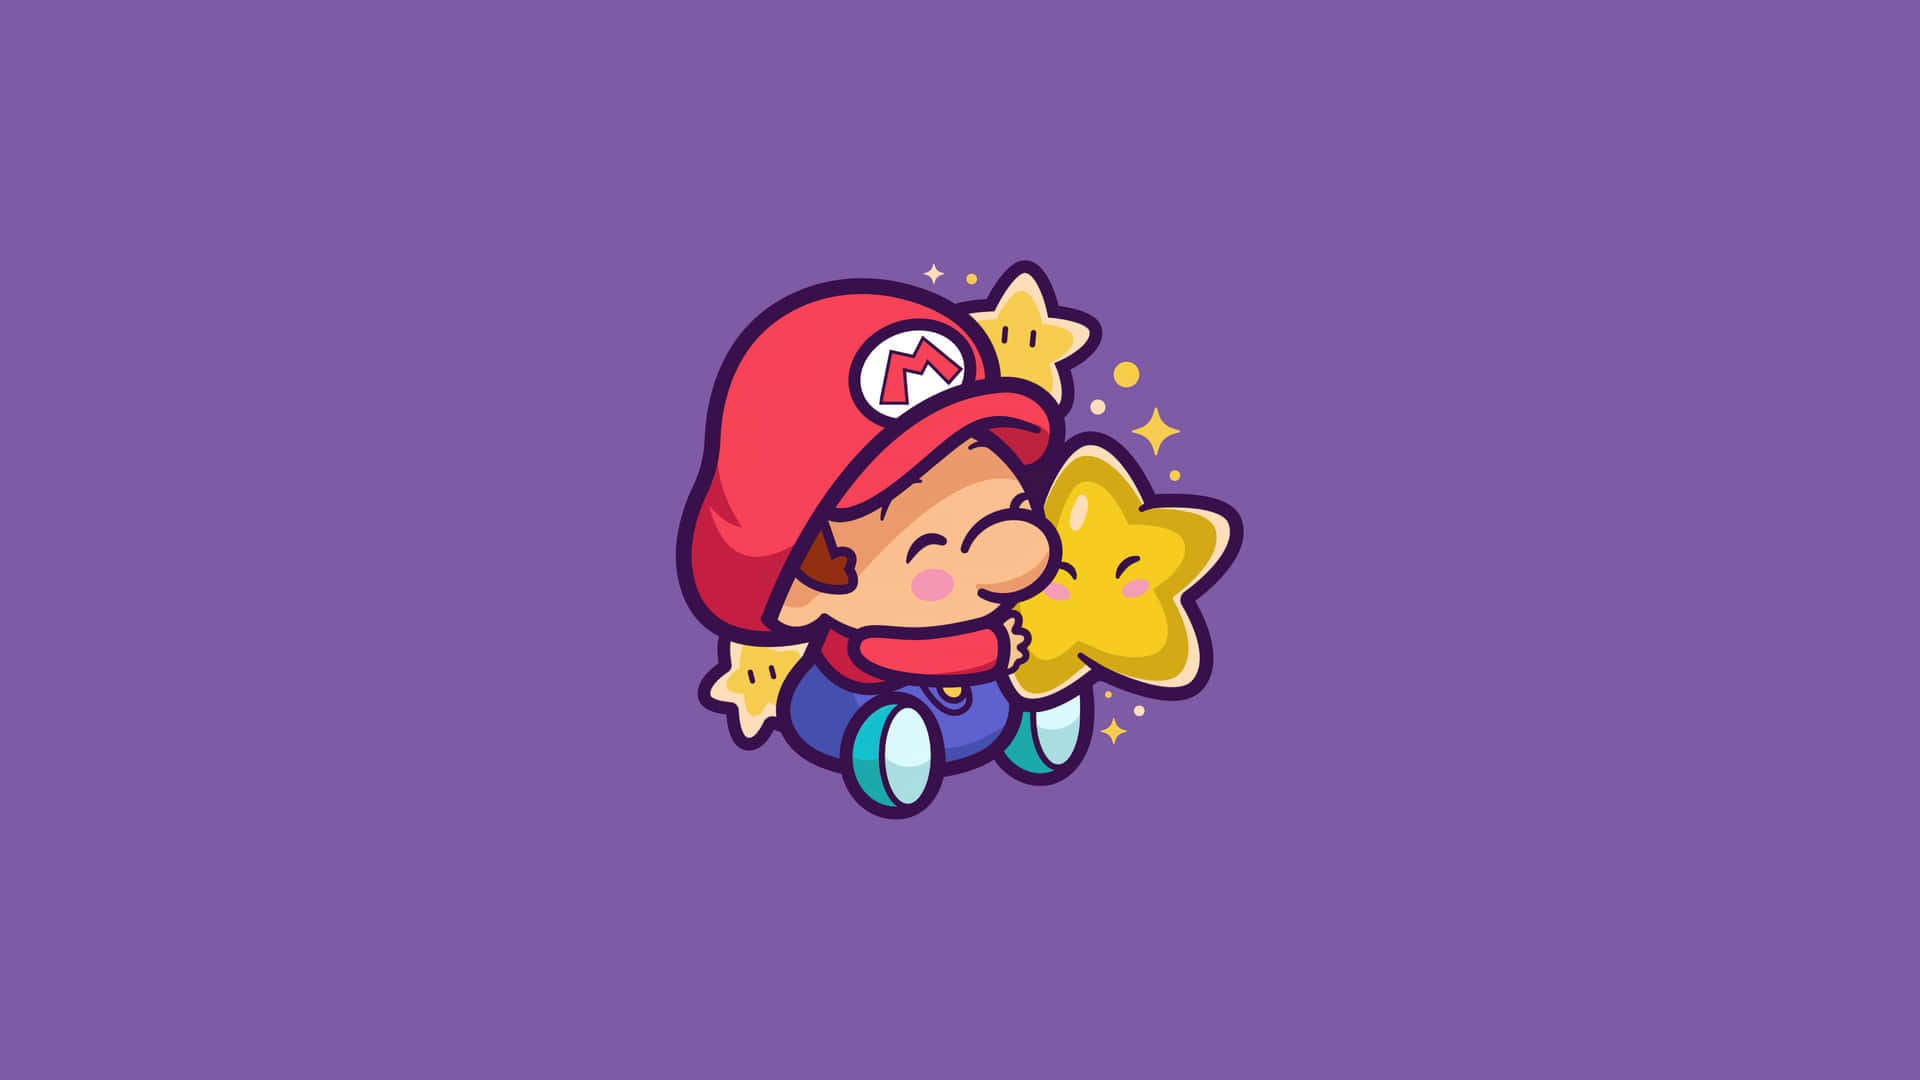 Chibi Mario With Star Illustration Wallpaper